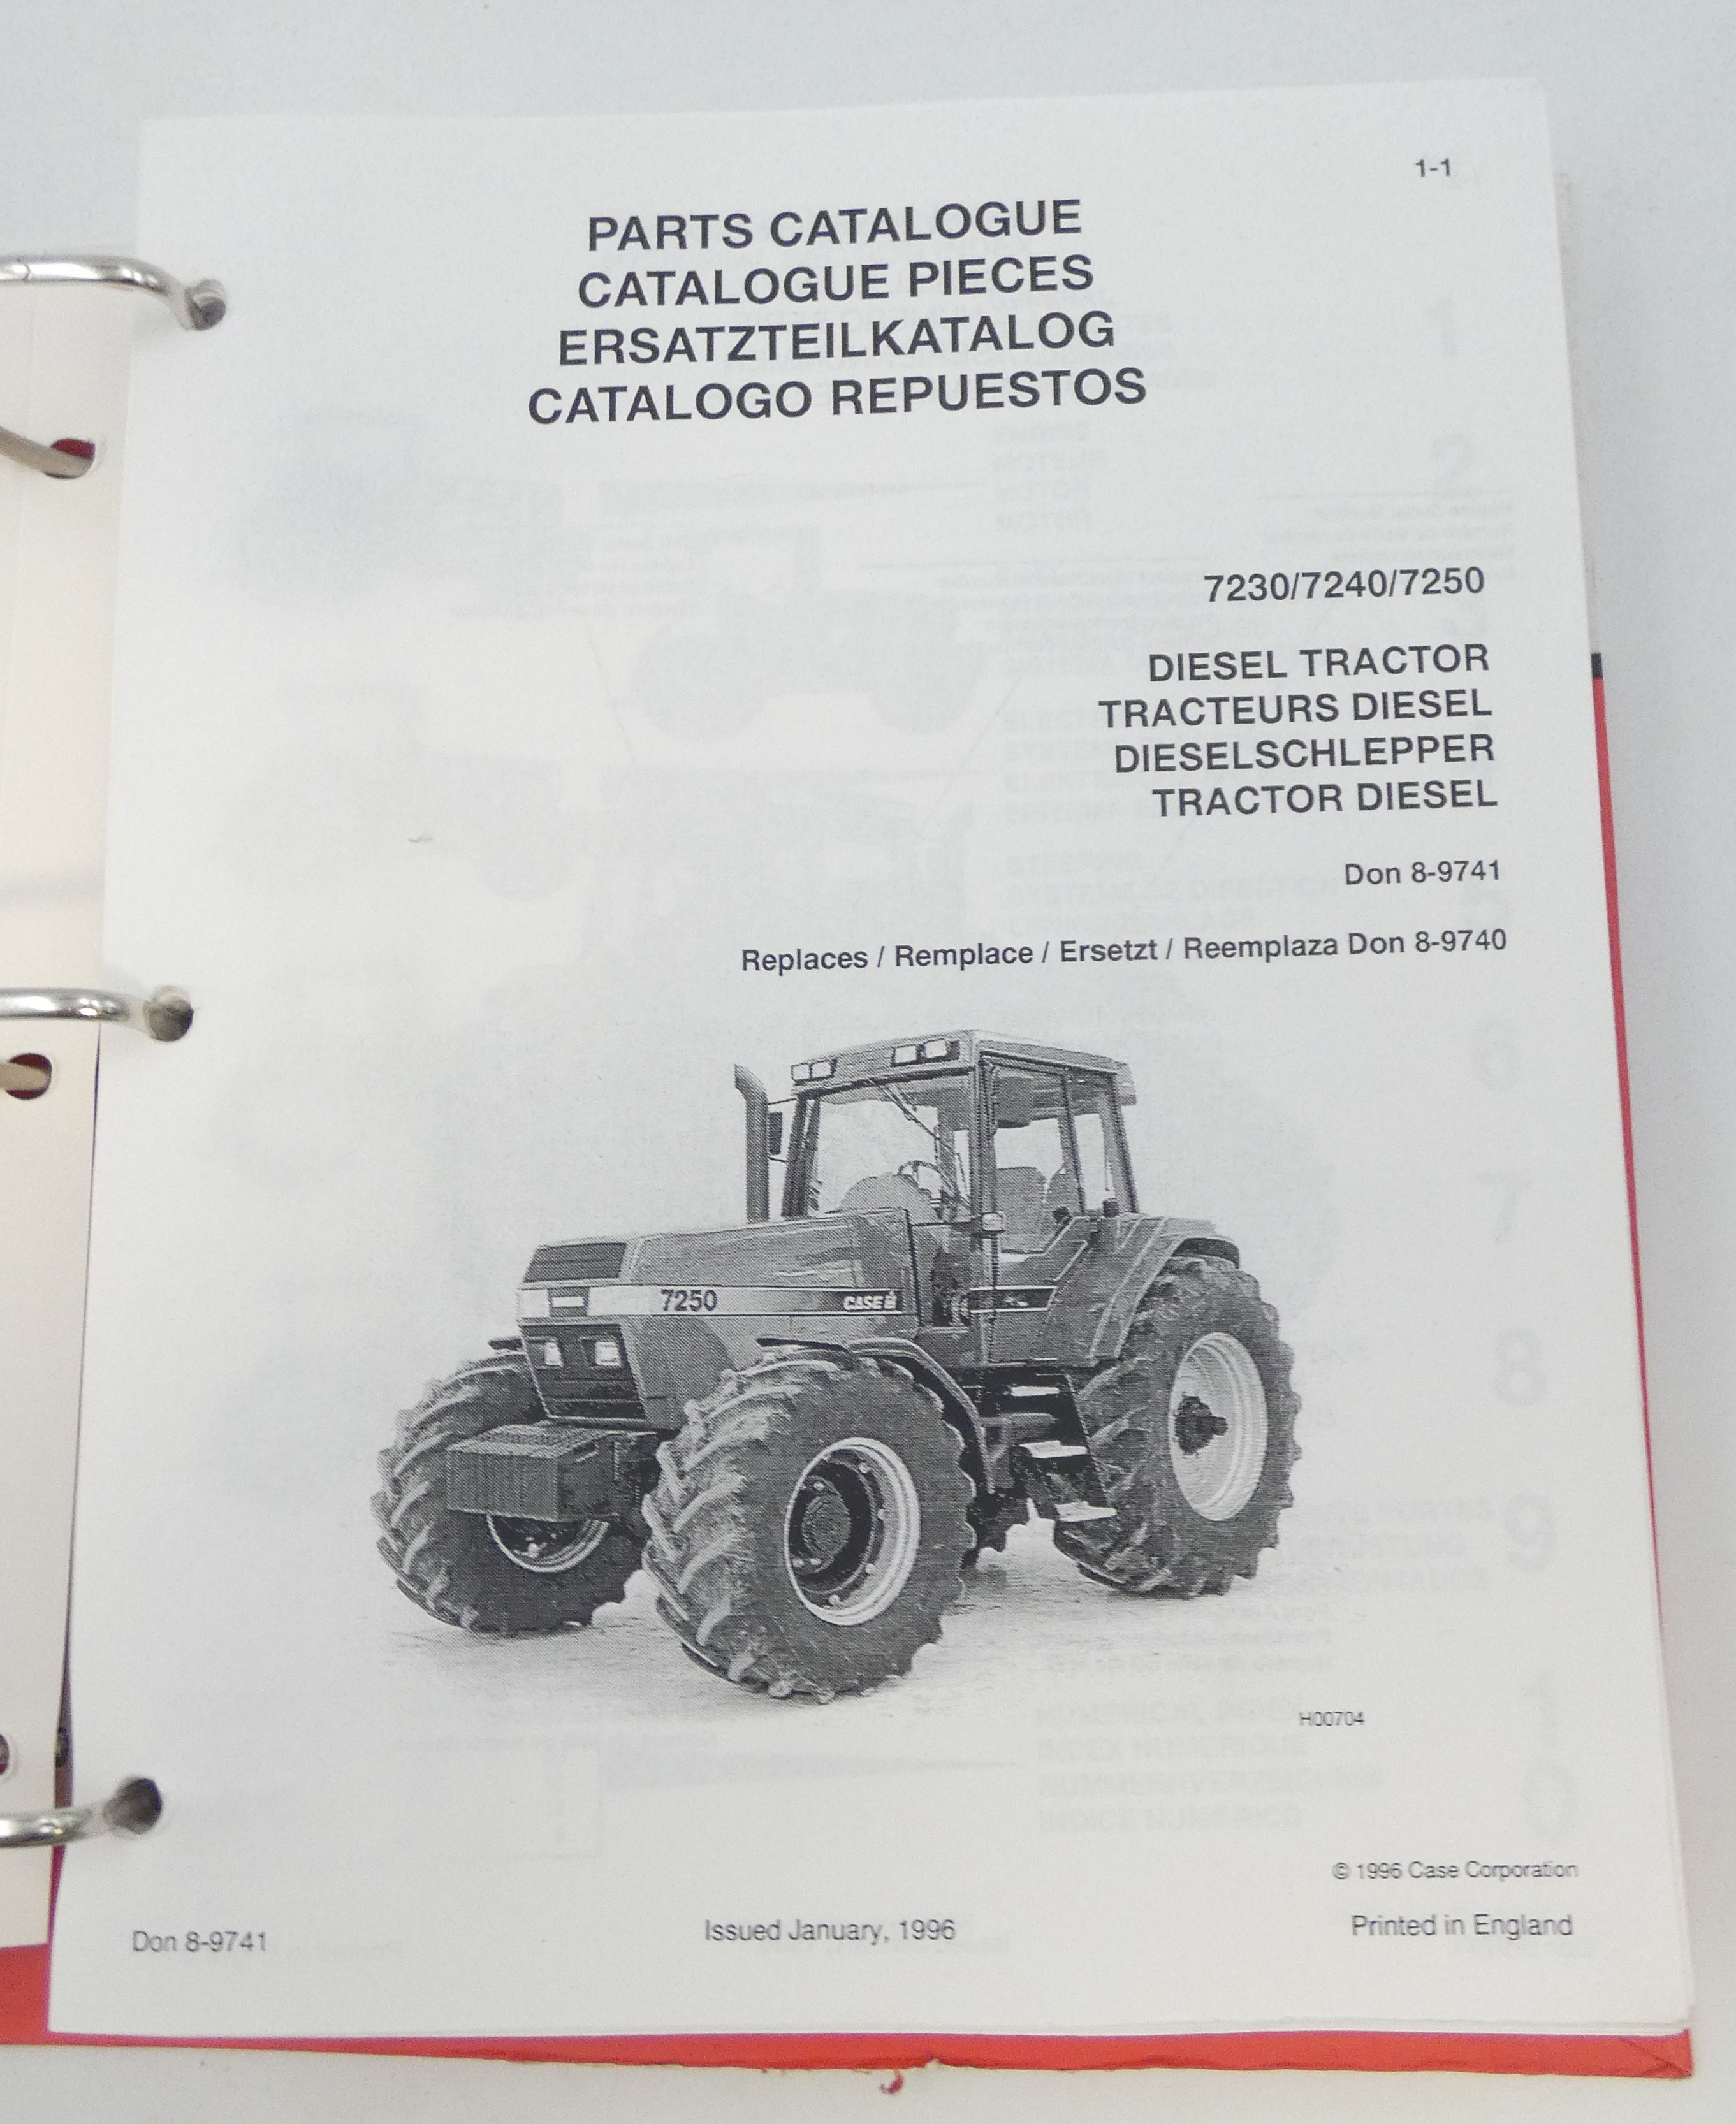 CaseIH 7230, 7240, 7250 diesel tractor parts catalogue